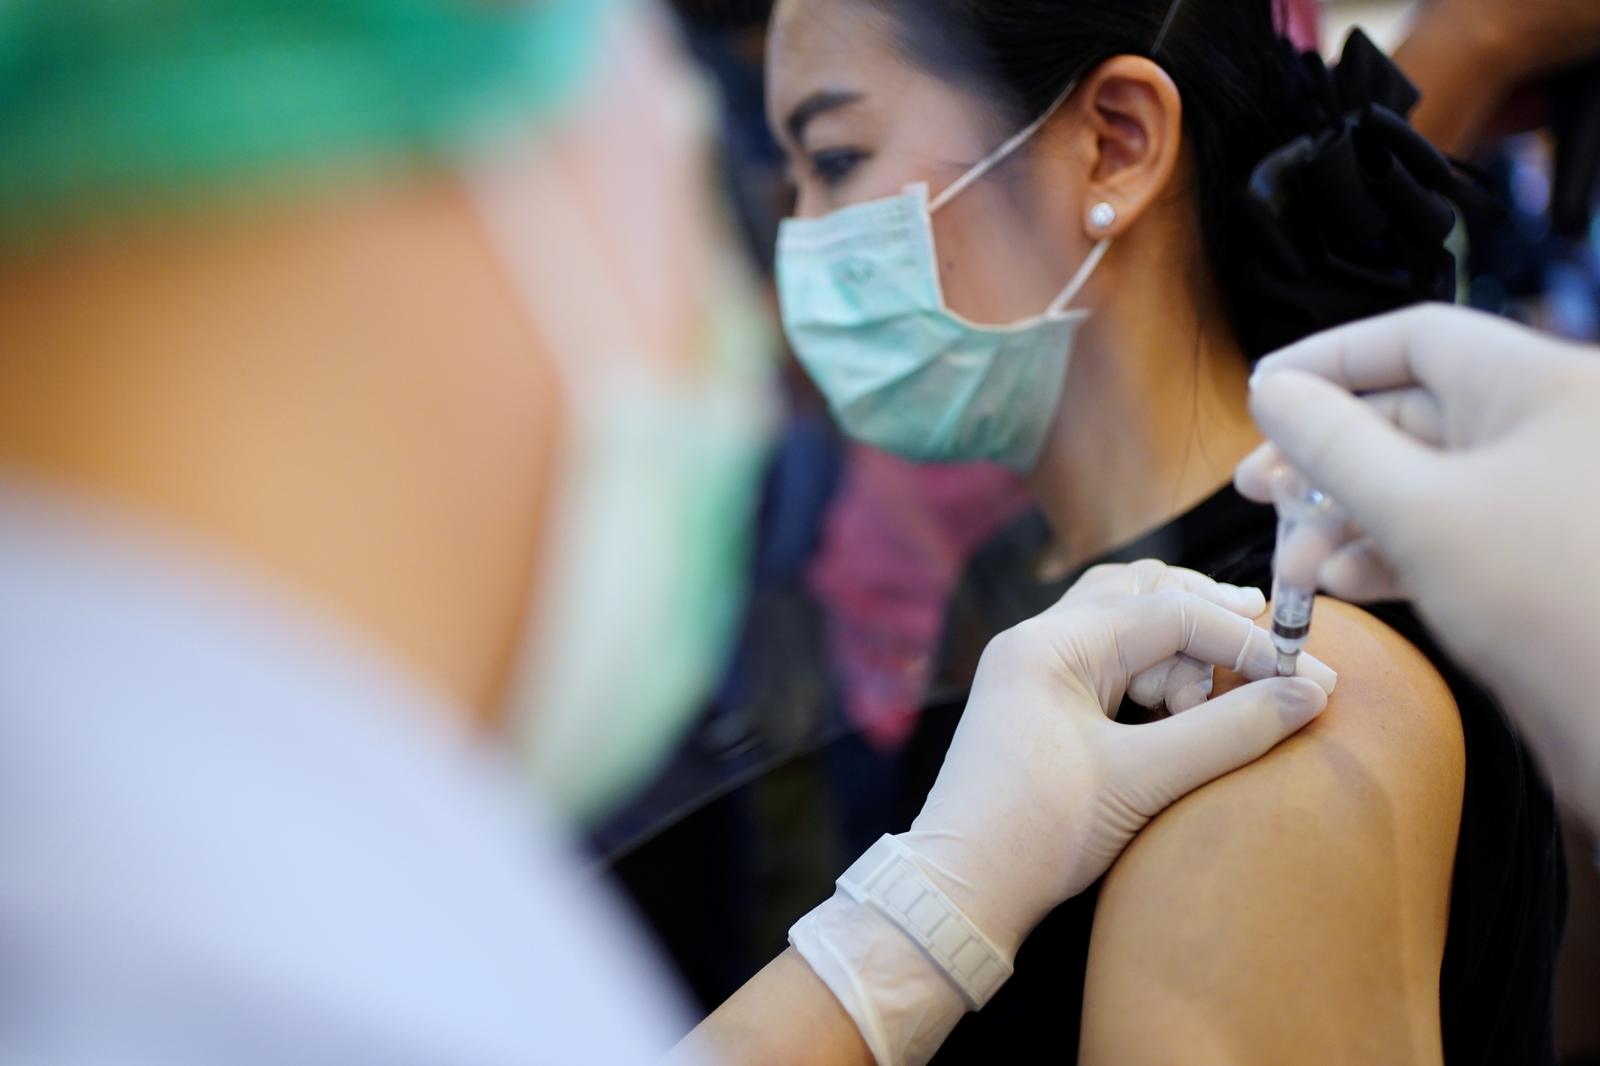 Thailand starts COVID-19 vaccination campaign